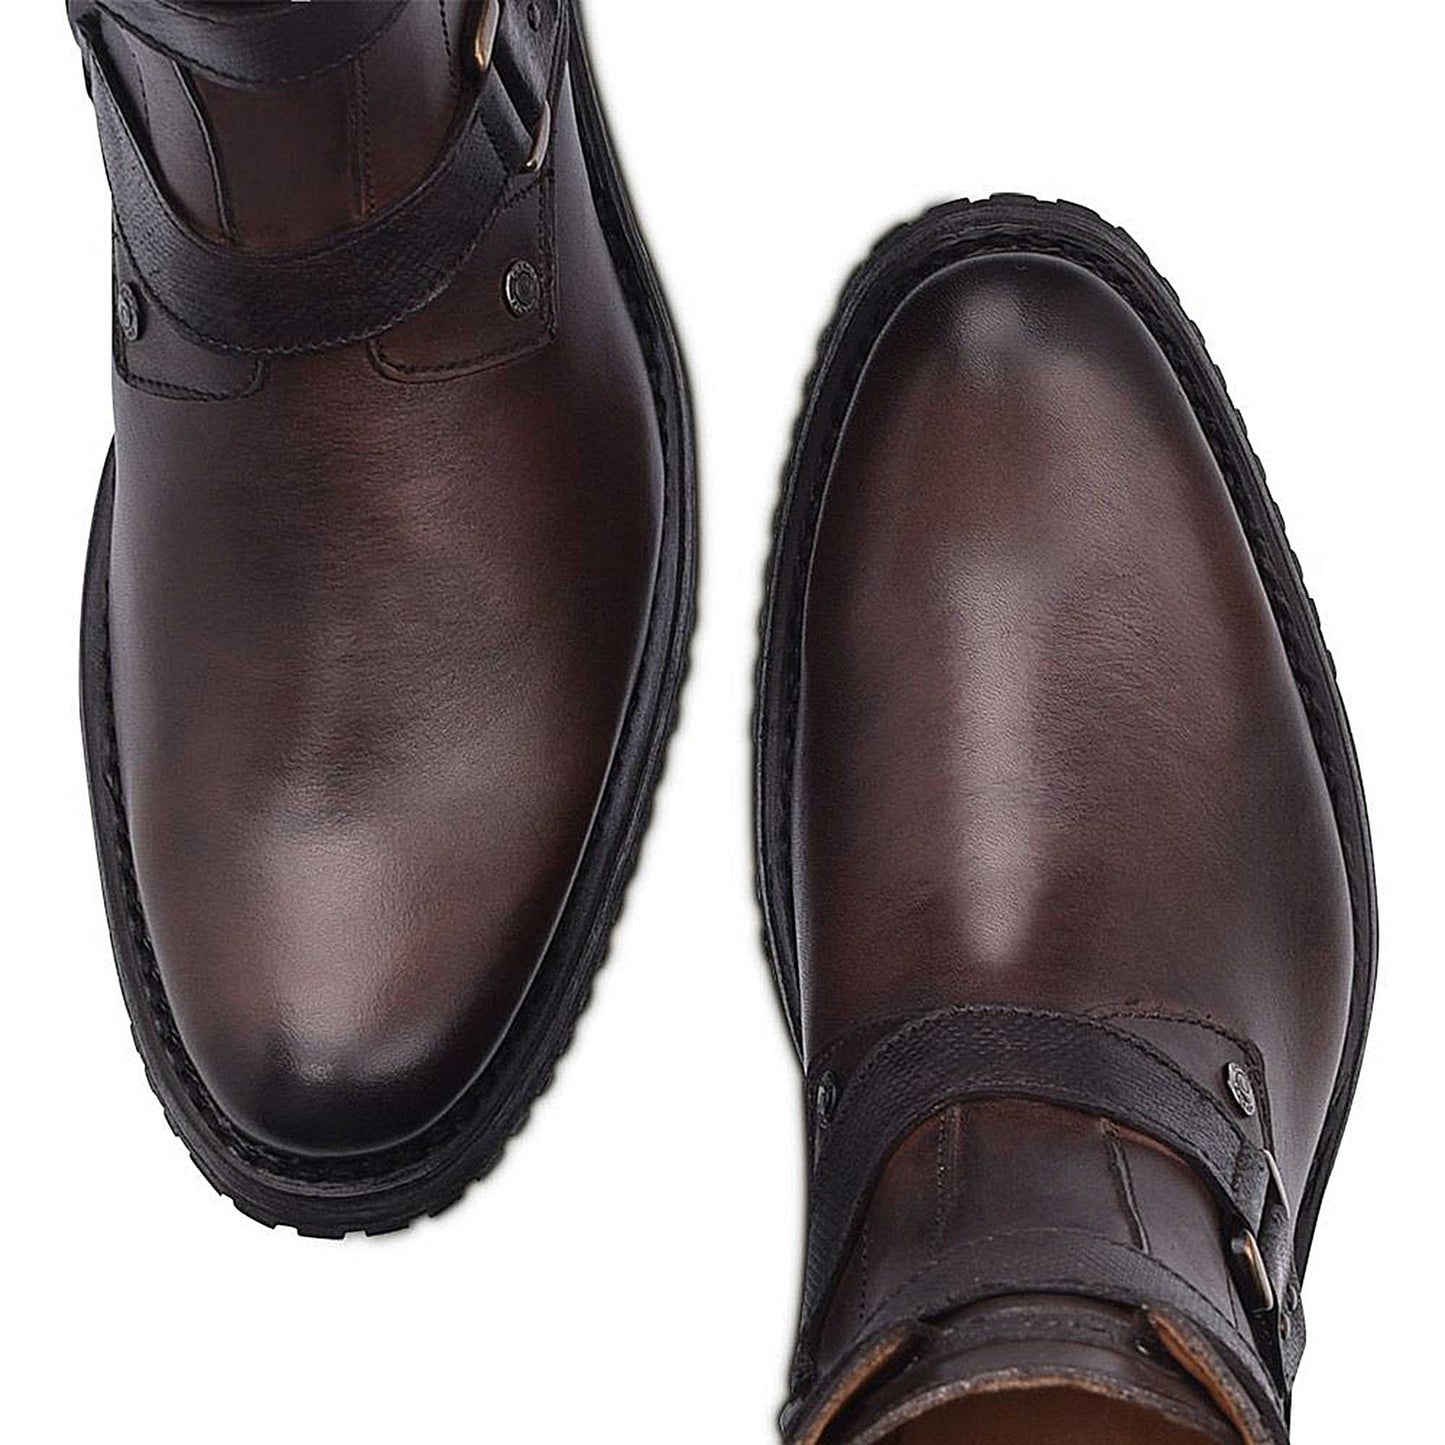 2T13CS - Cuadra brown vintage fashion cowboy leather ankle boots for men-CUADRA-Kuet-Cuadra-Boots